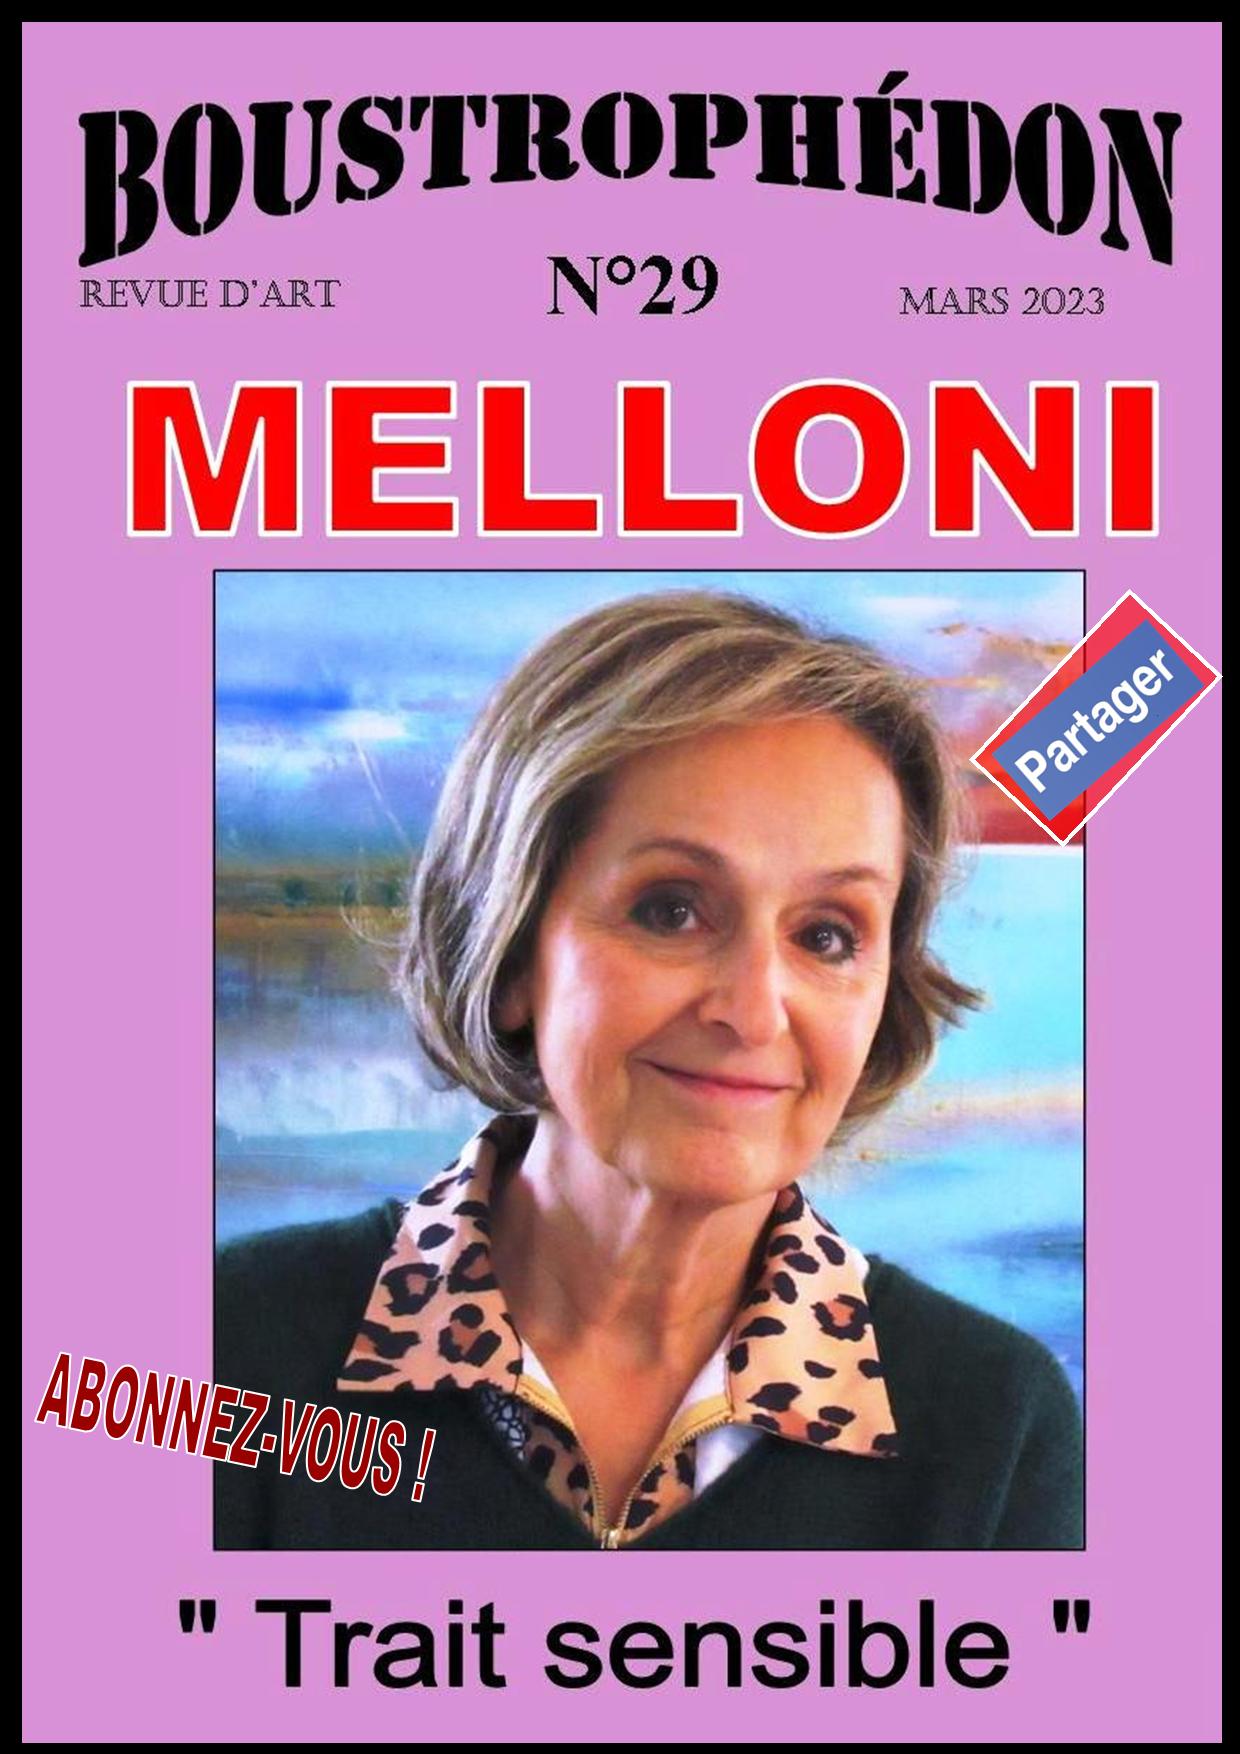 Chantal MELLONI - 2023 - dans le Boustrophédon